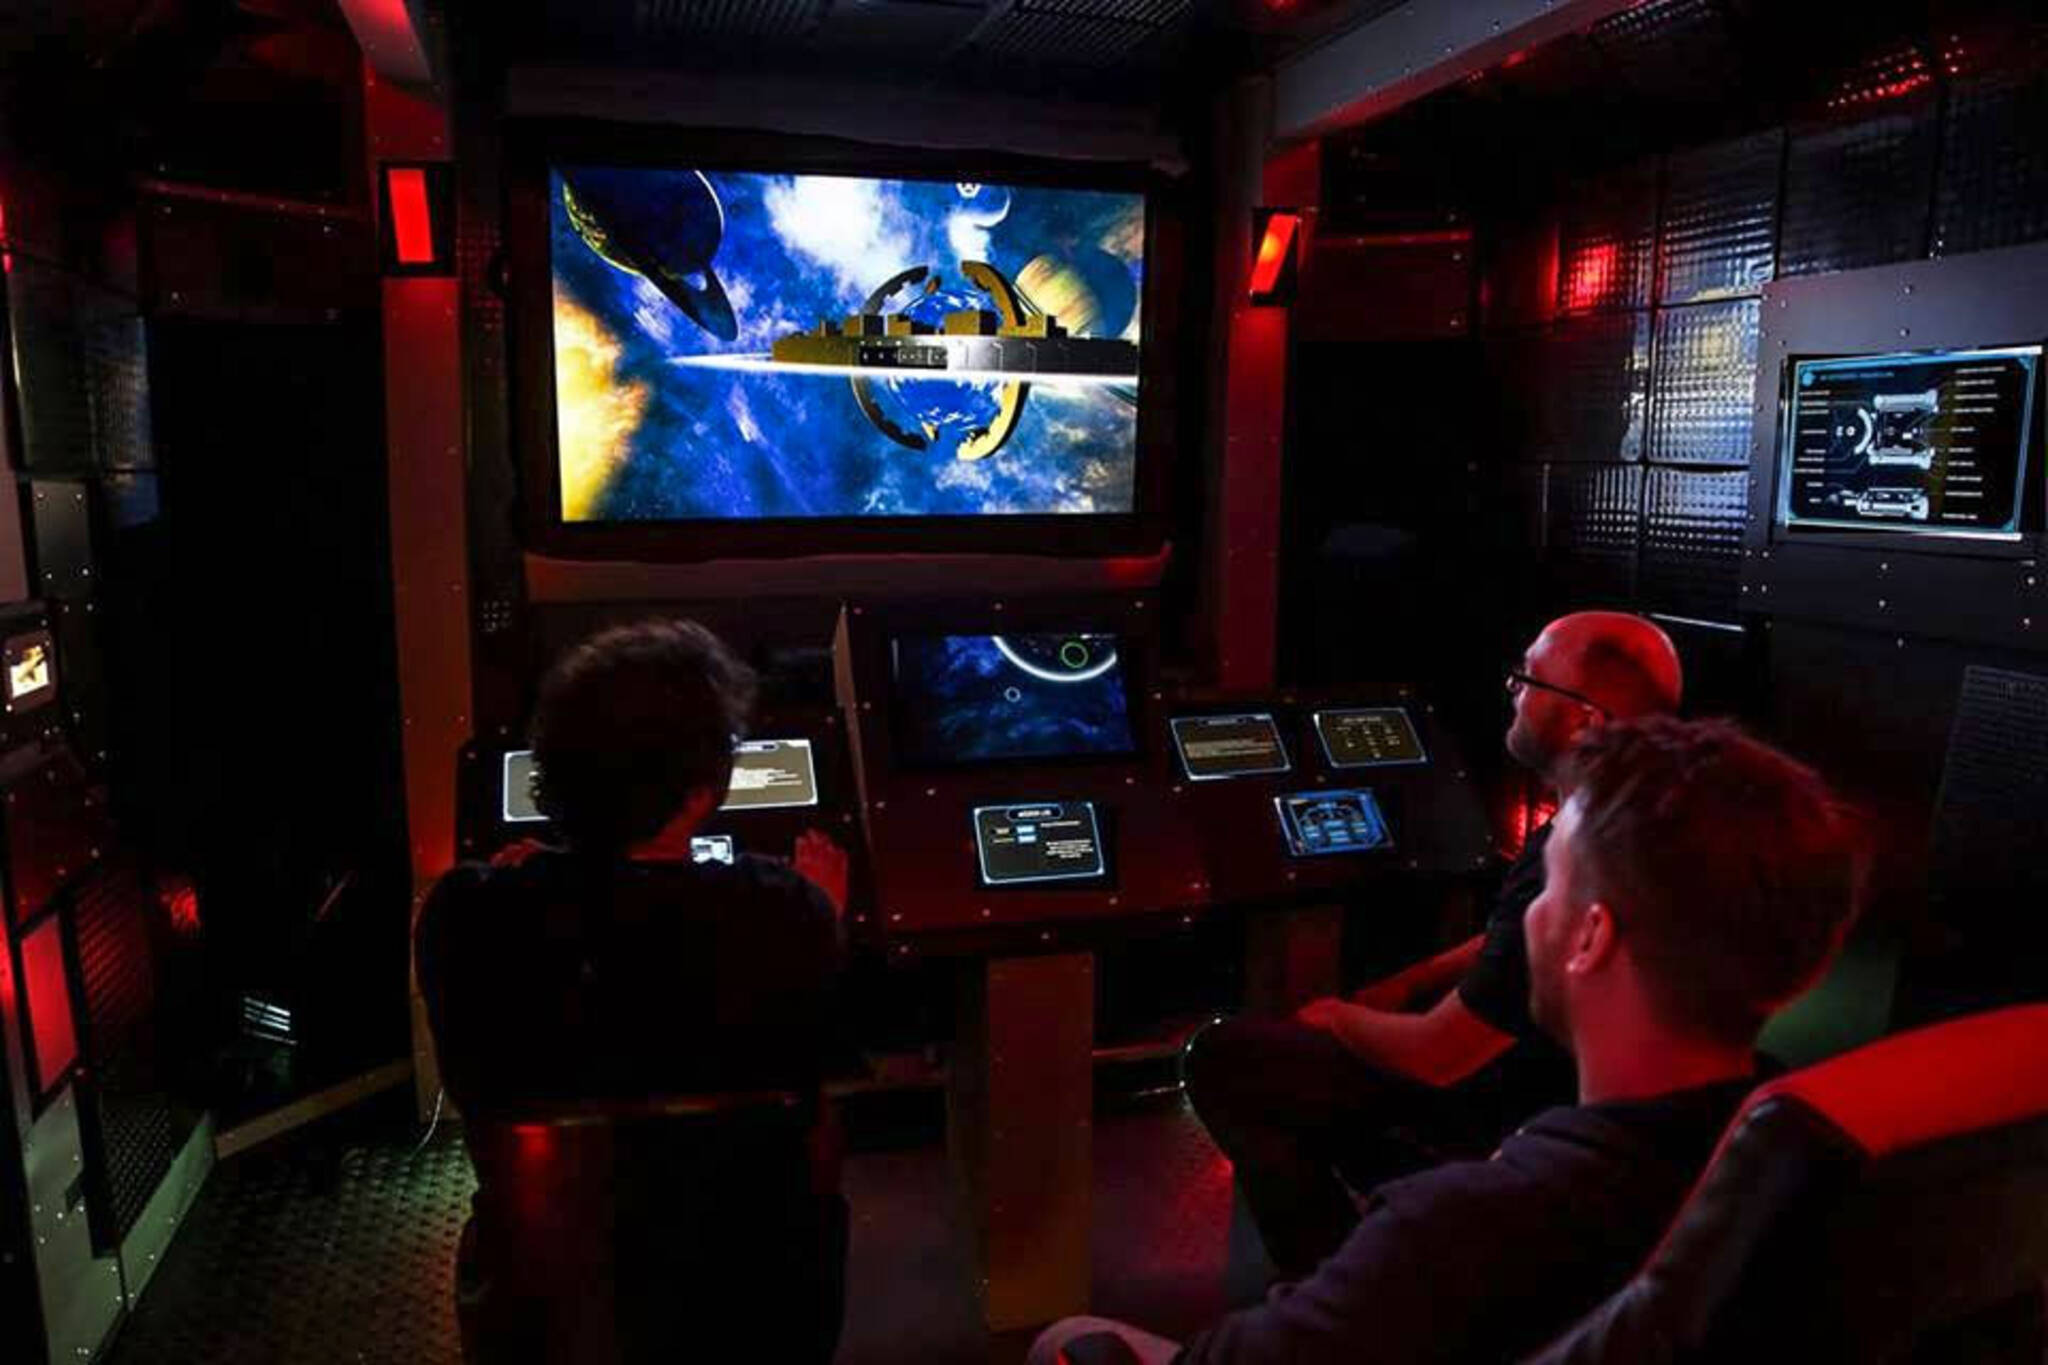 Toronto Just Got An Escape Room Inside A Spacecraft